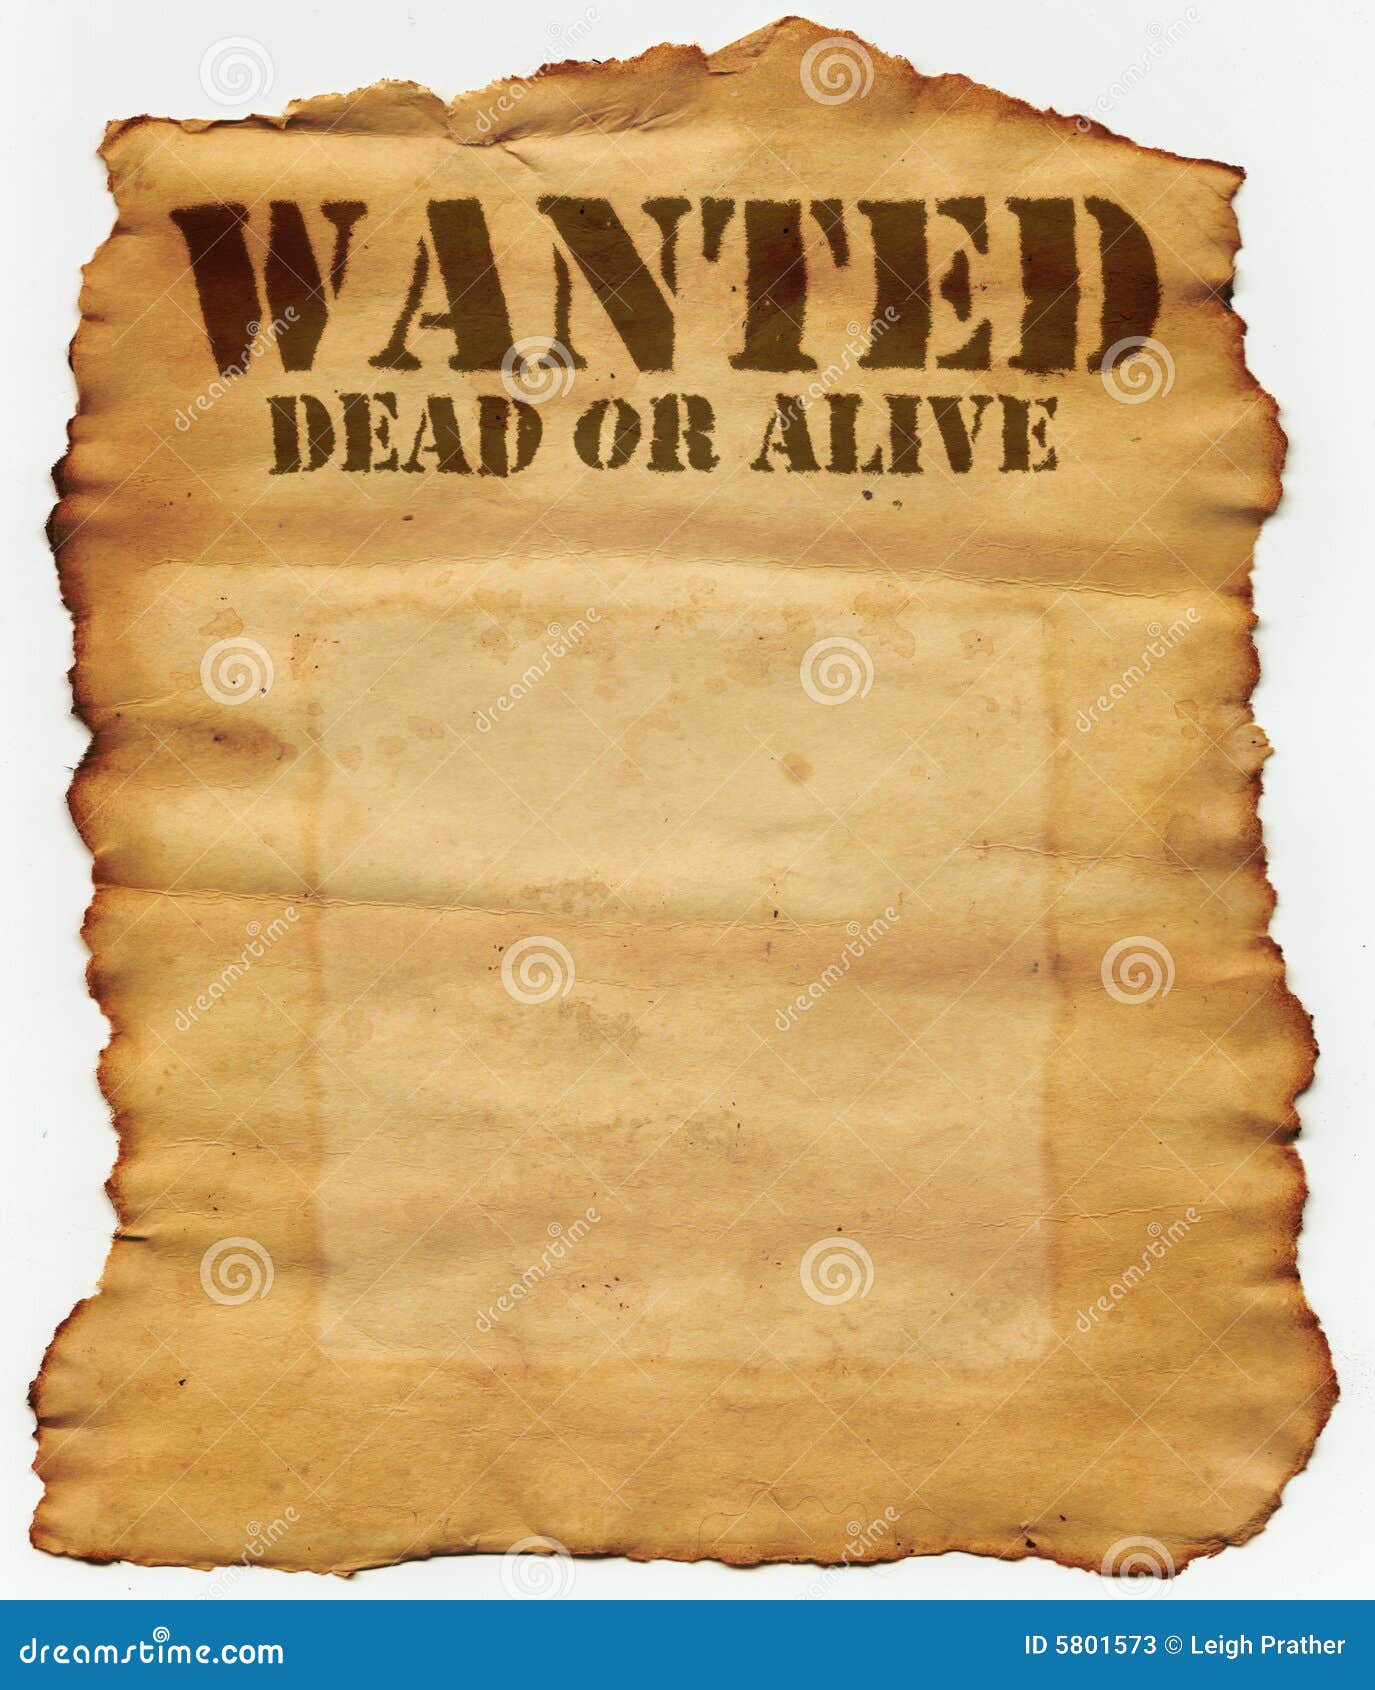 Wanted Dead or Alive stock illustration. Illustration of burnt - 5801573